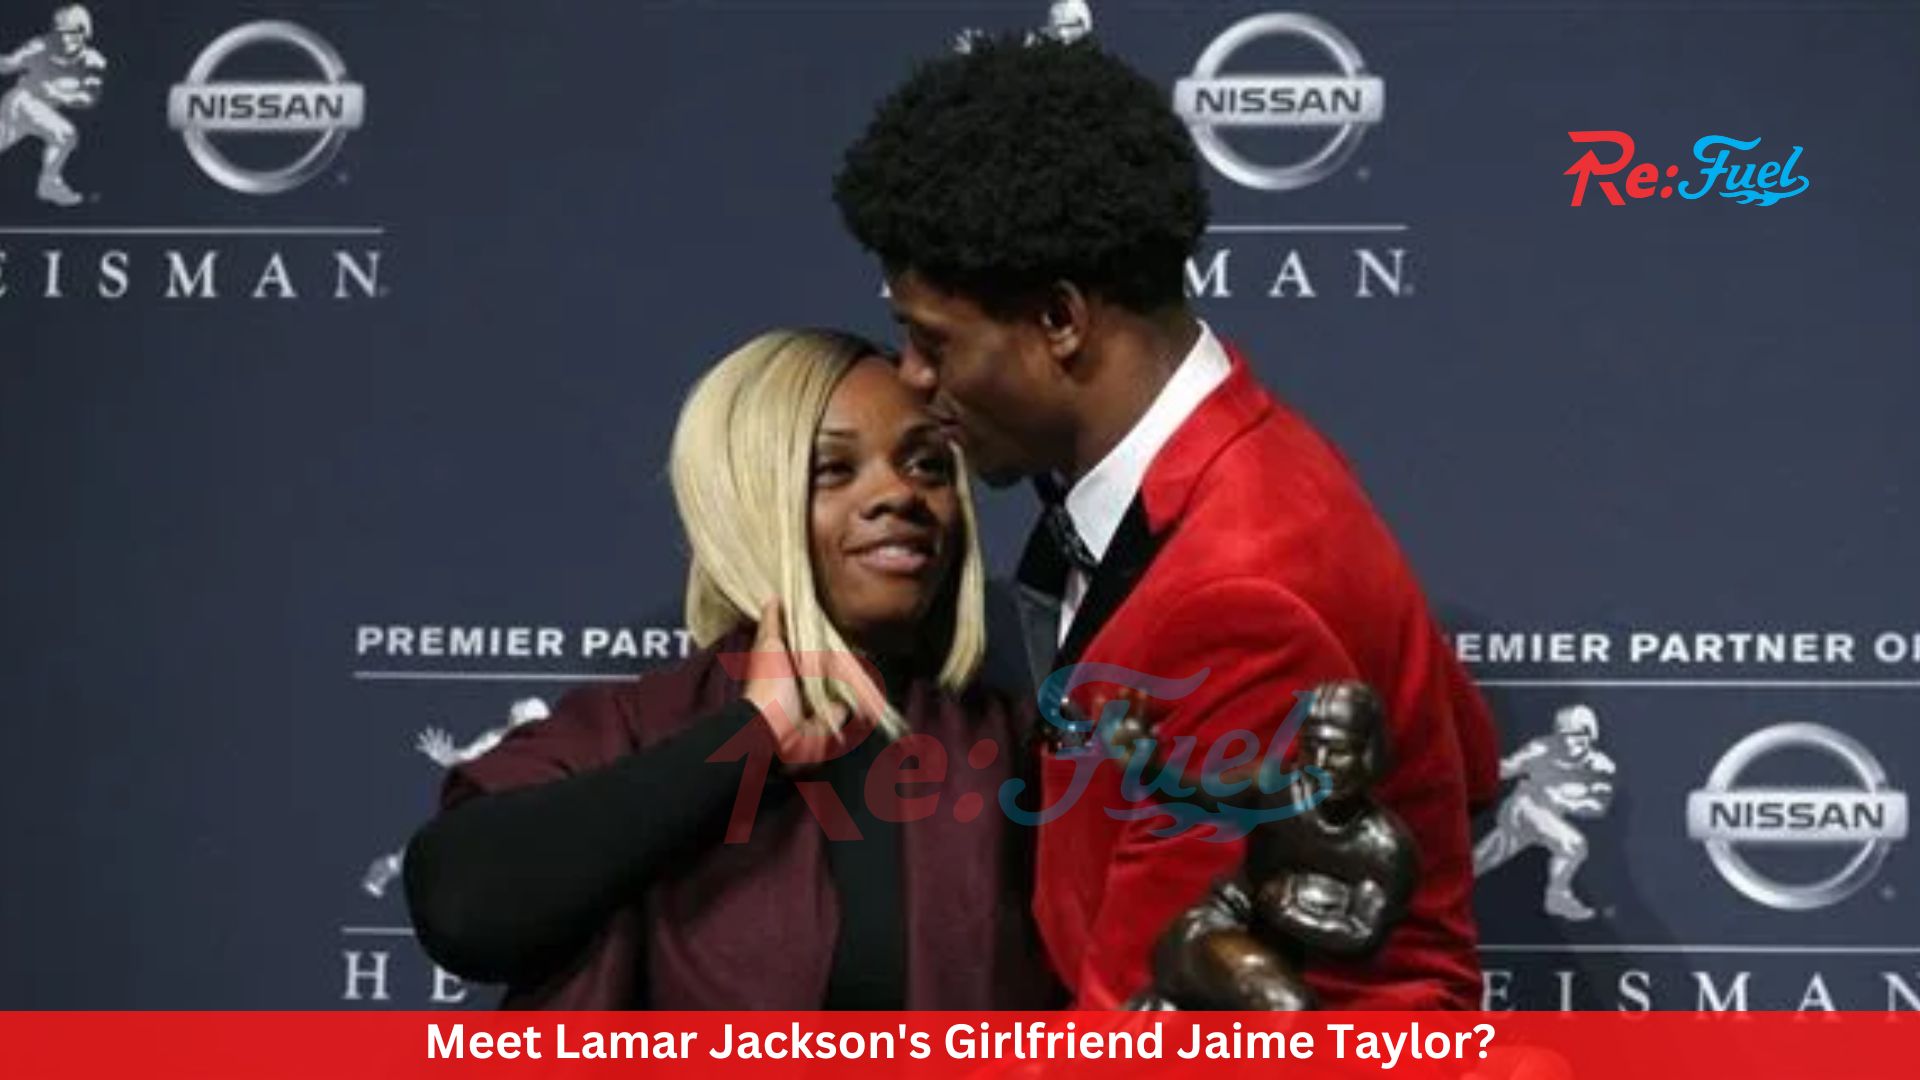 Meet Lamar Jackson's Girlfriend Jaime Taylor: Made Him Delete Offensive Tweet